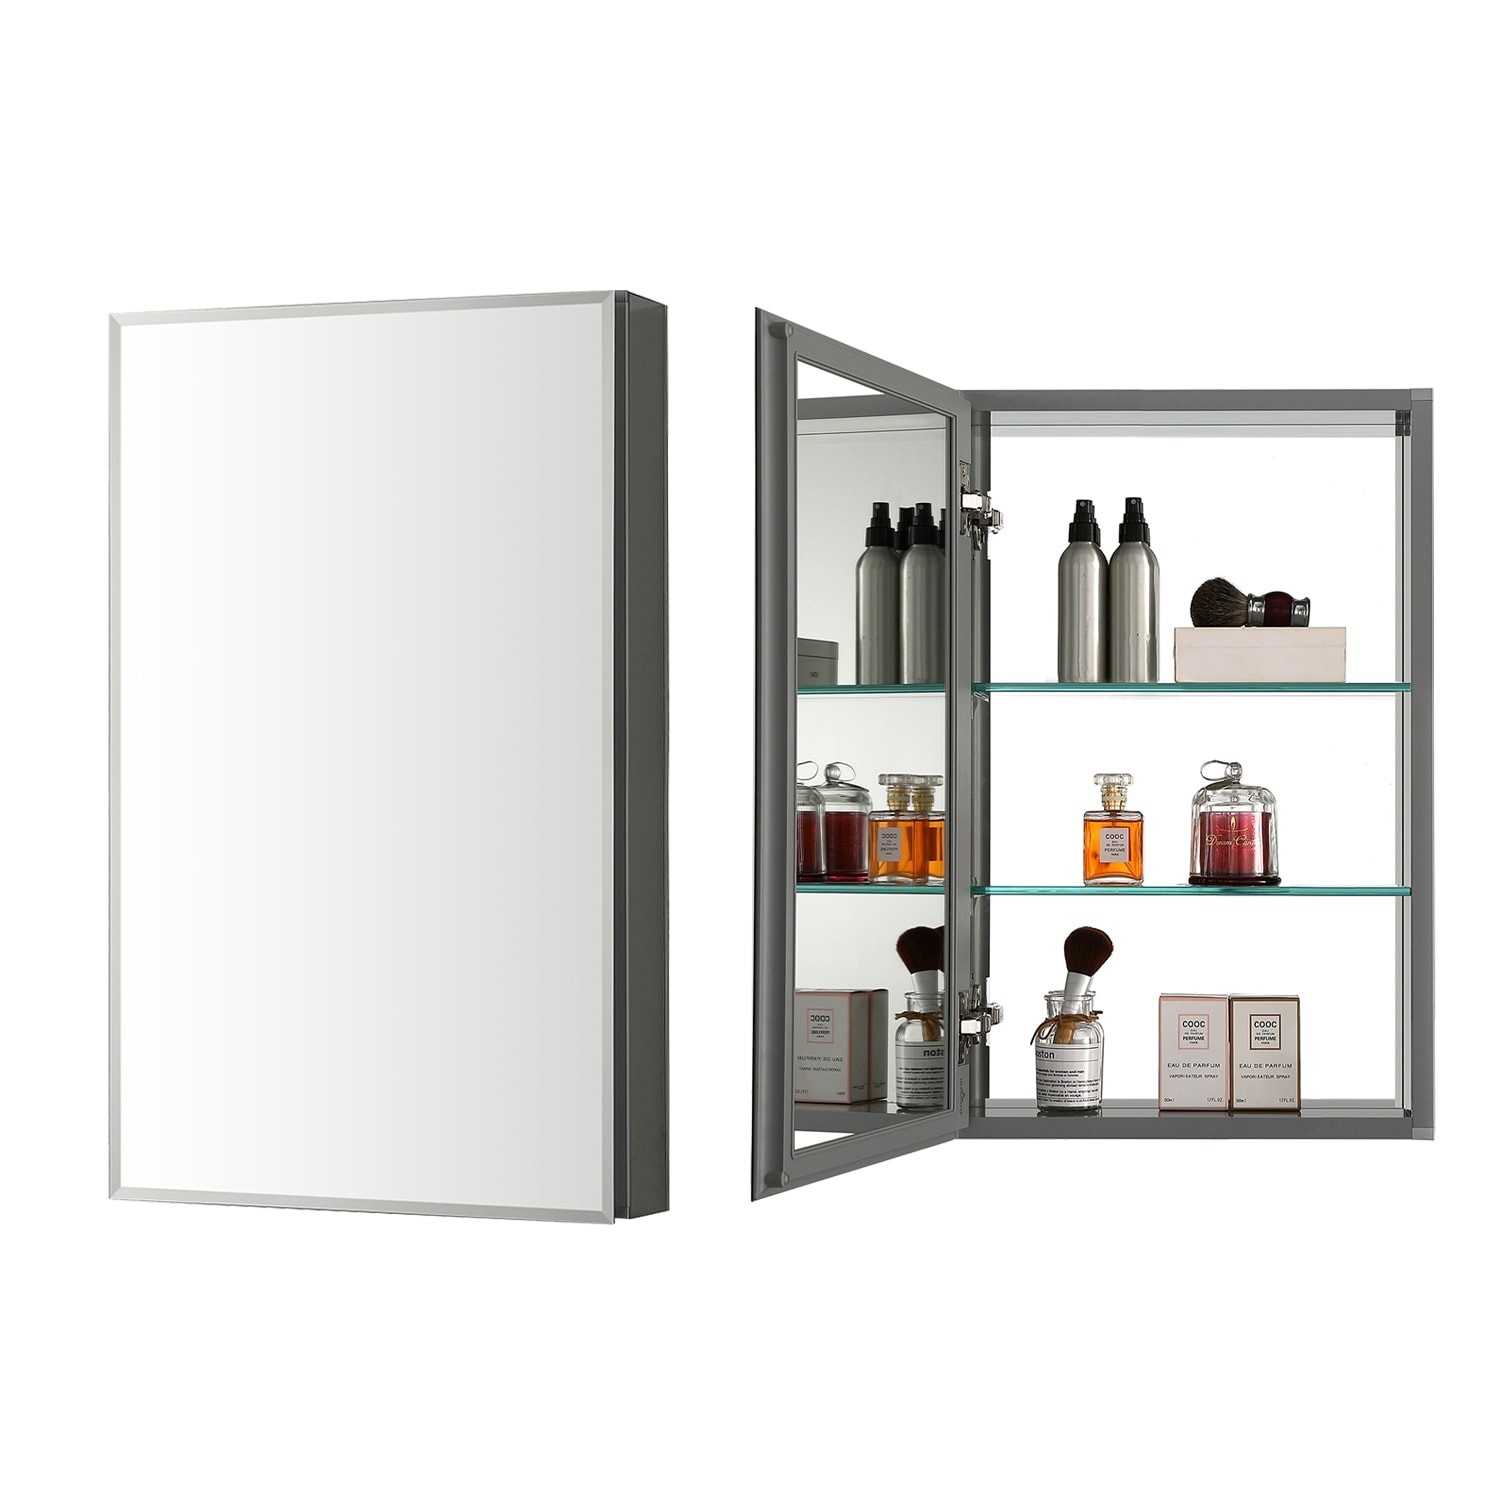 https://ak1.ostkcdn.com/images/products/is/images/direct/0240c553ae27b78f5e7da41e70ce4462b09f25fa/Frameless-Aluminum-Bathroom-Mirror-Medicine-Cabinet.jpg